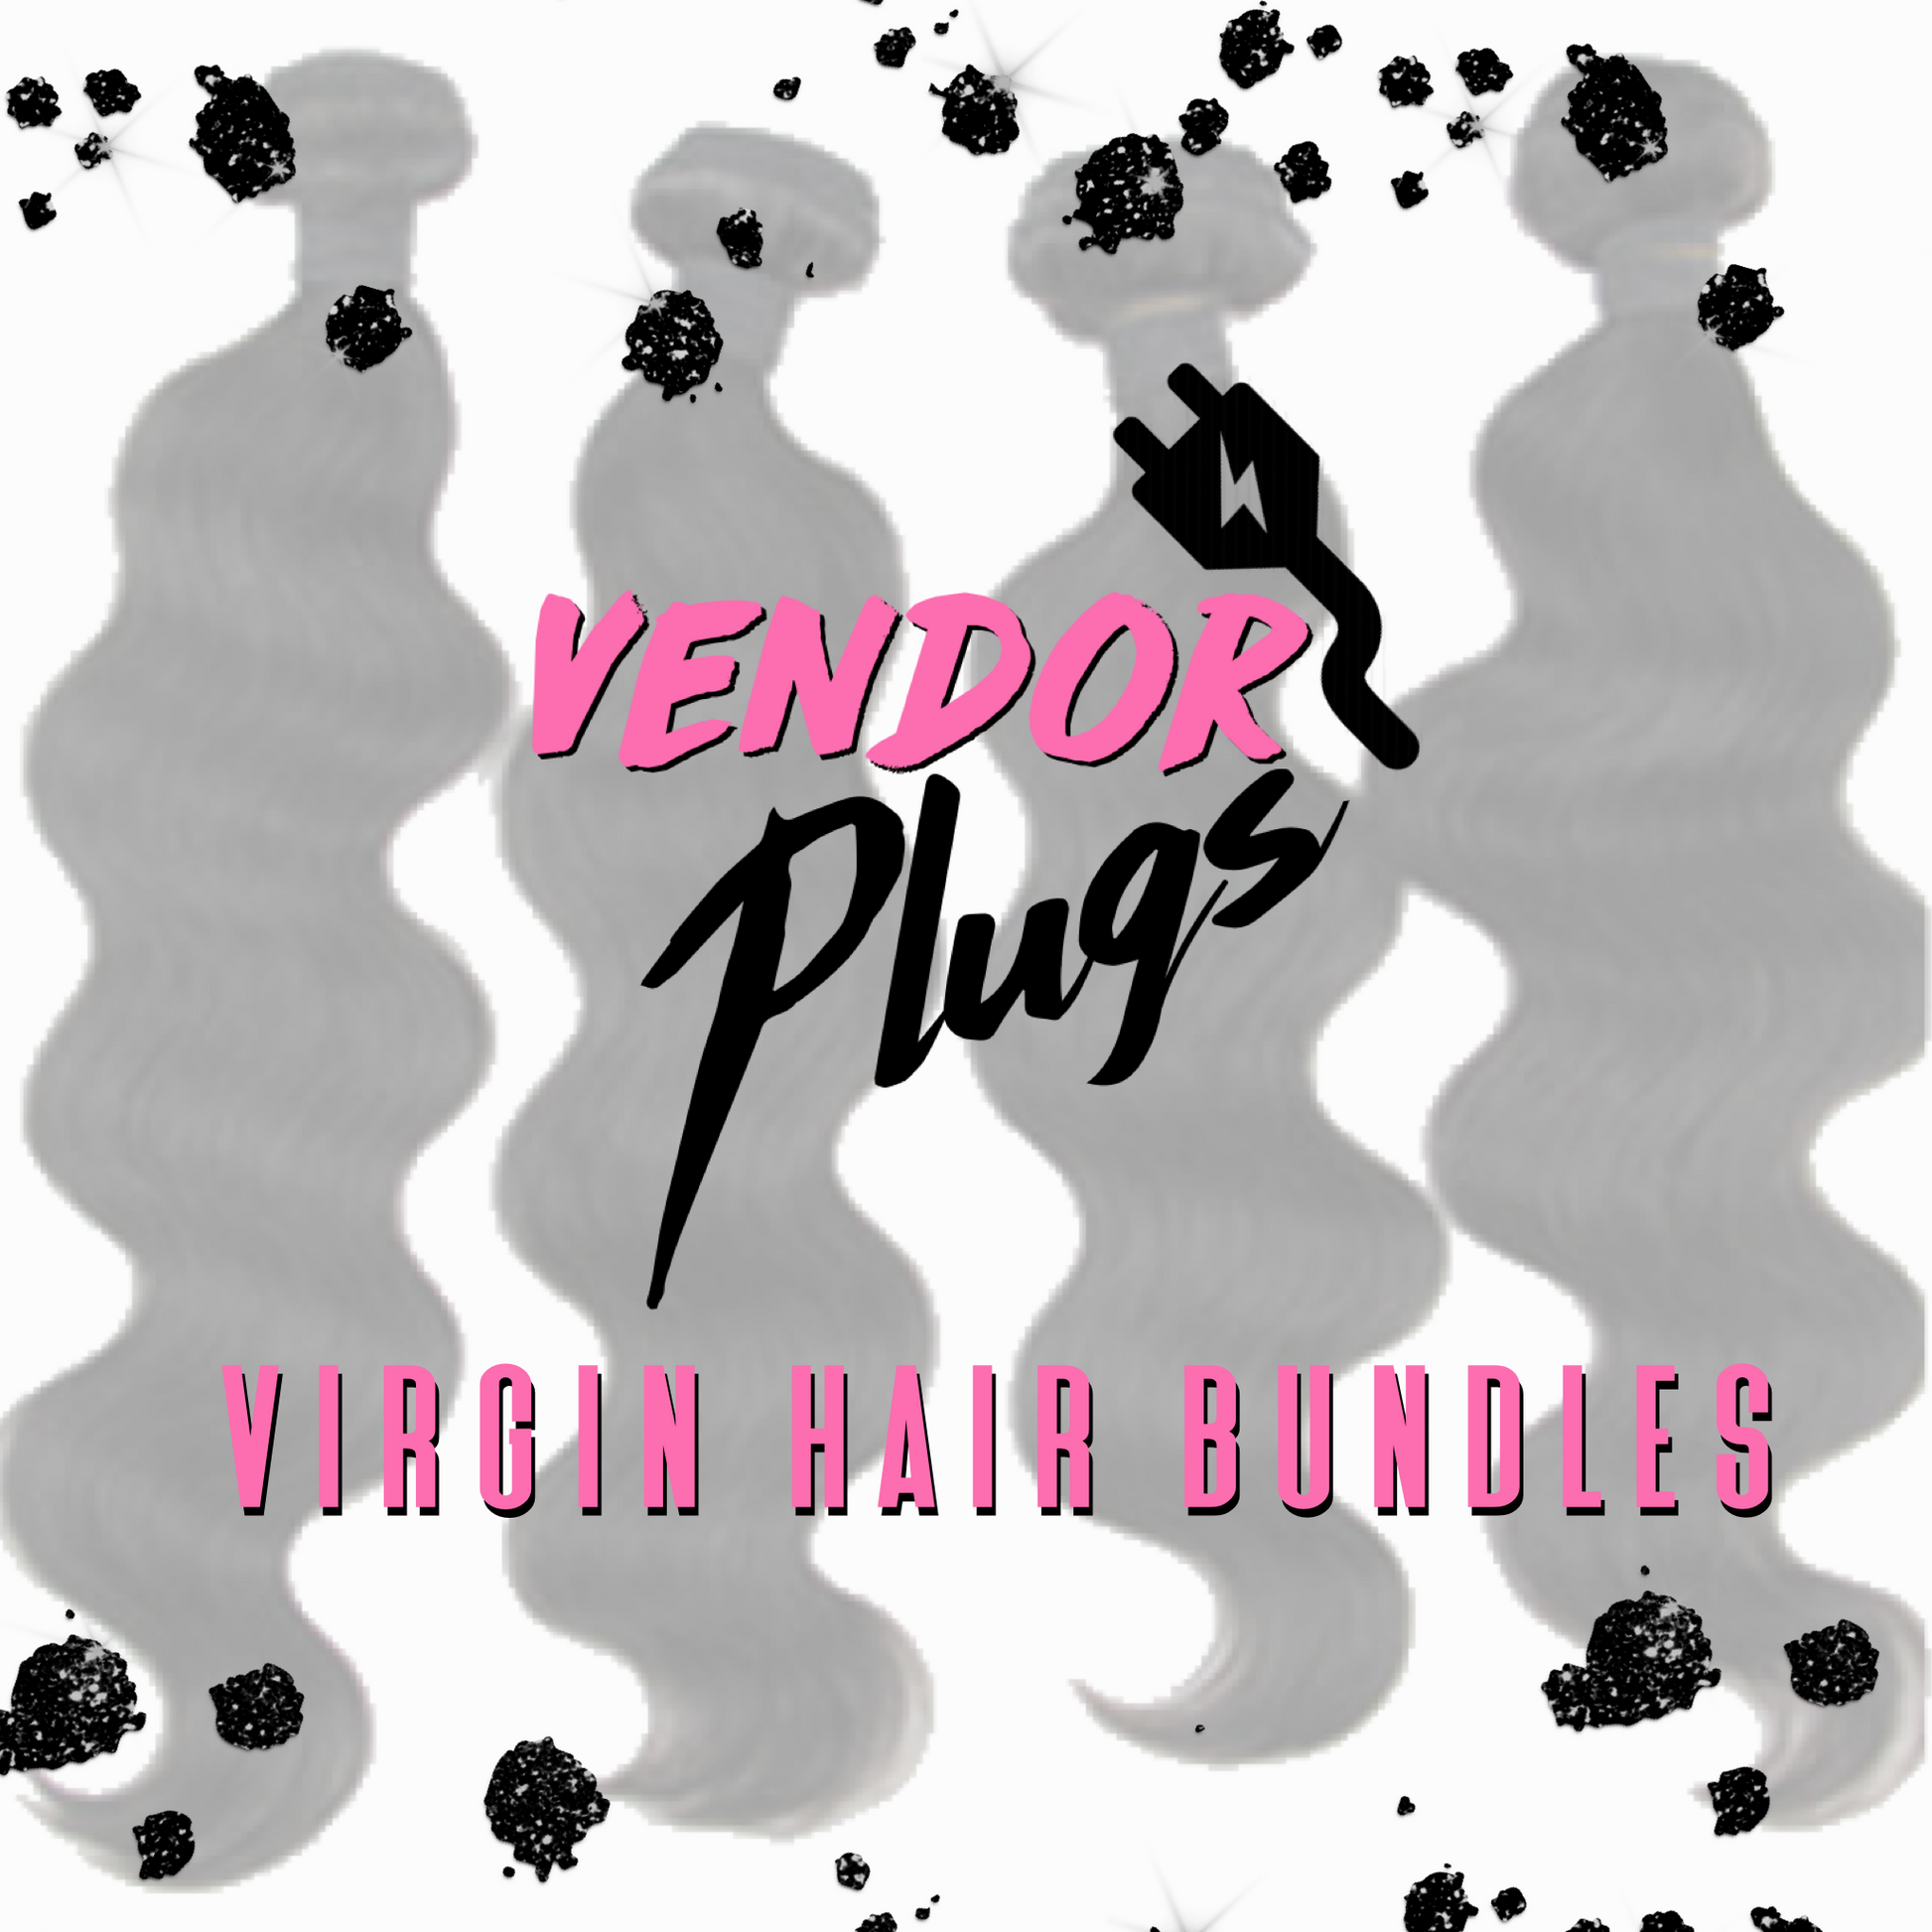 Virgin Hair Vendors - Glambella Shop